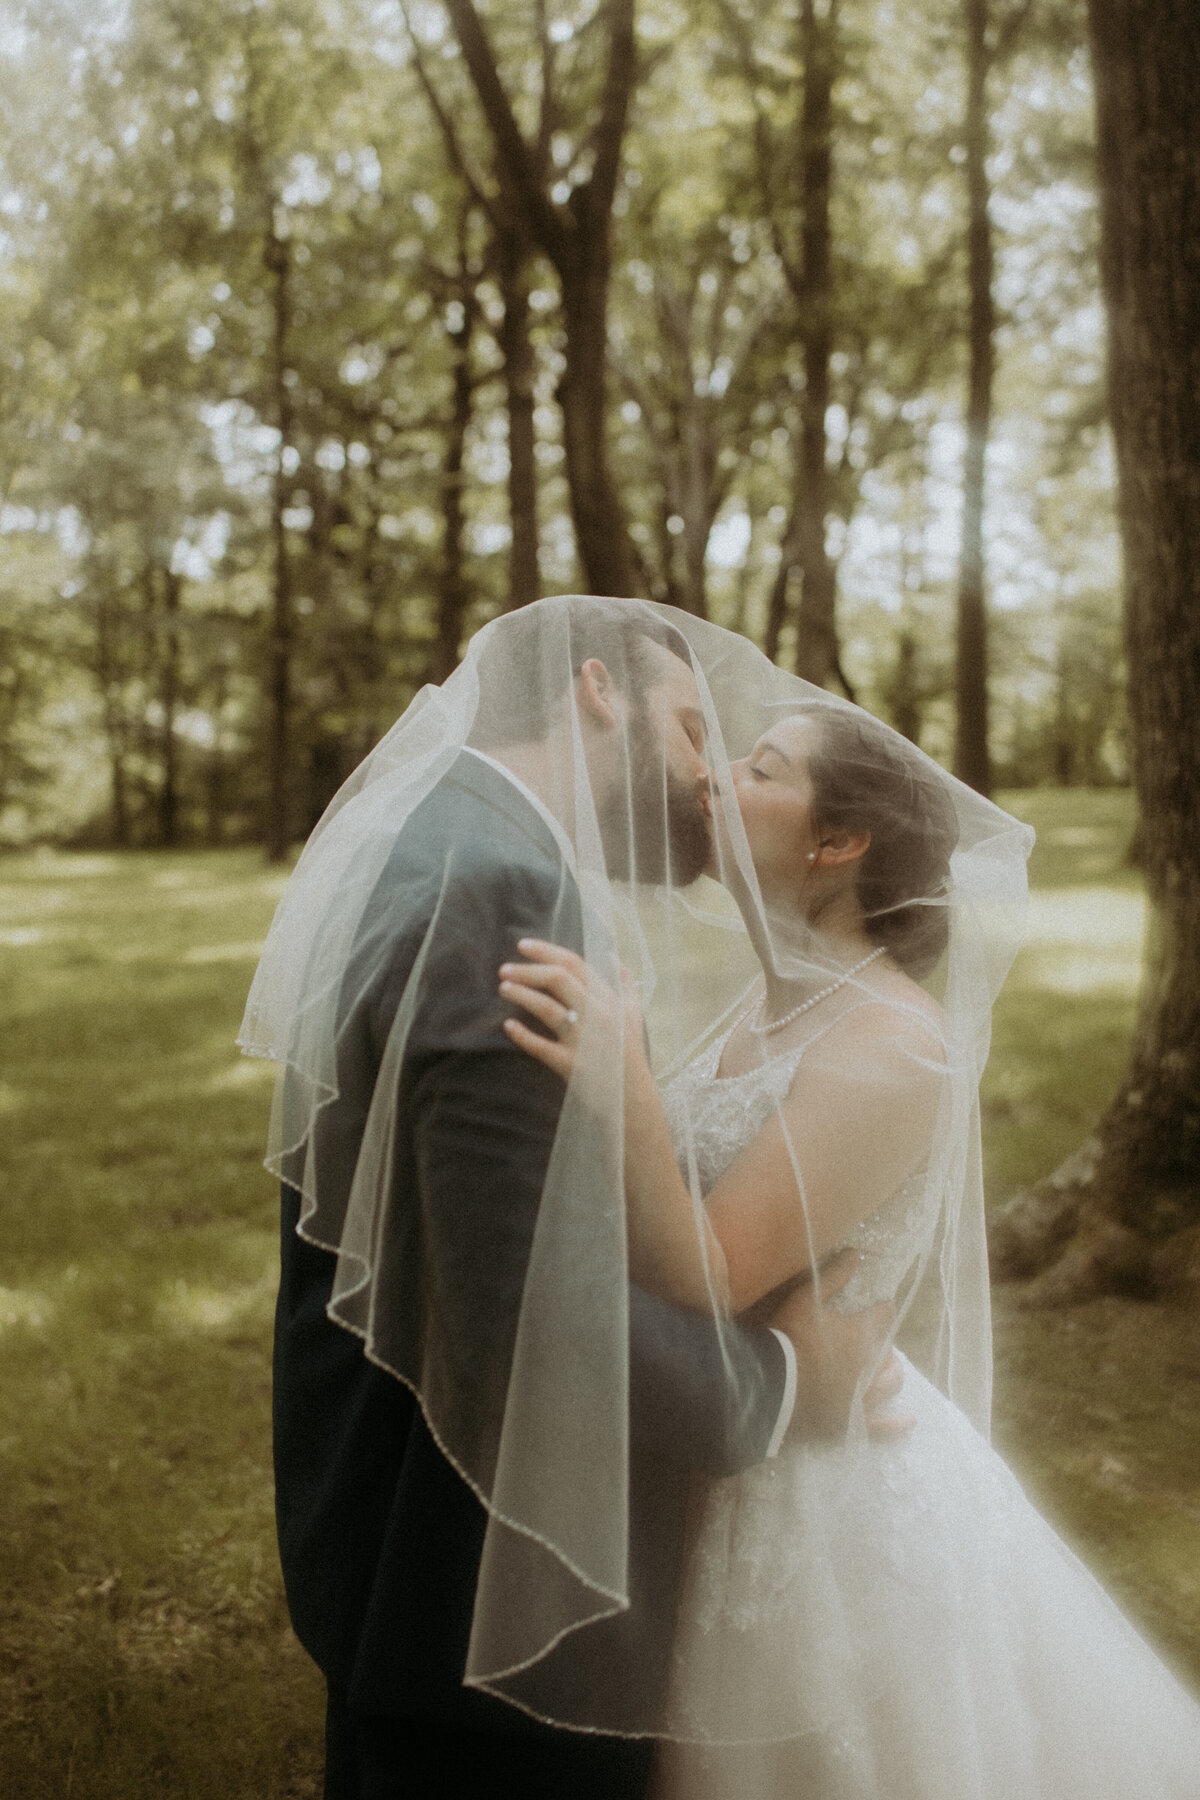 Veil wedding photos